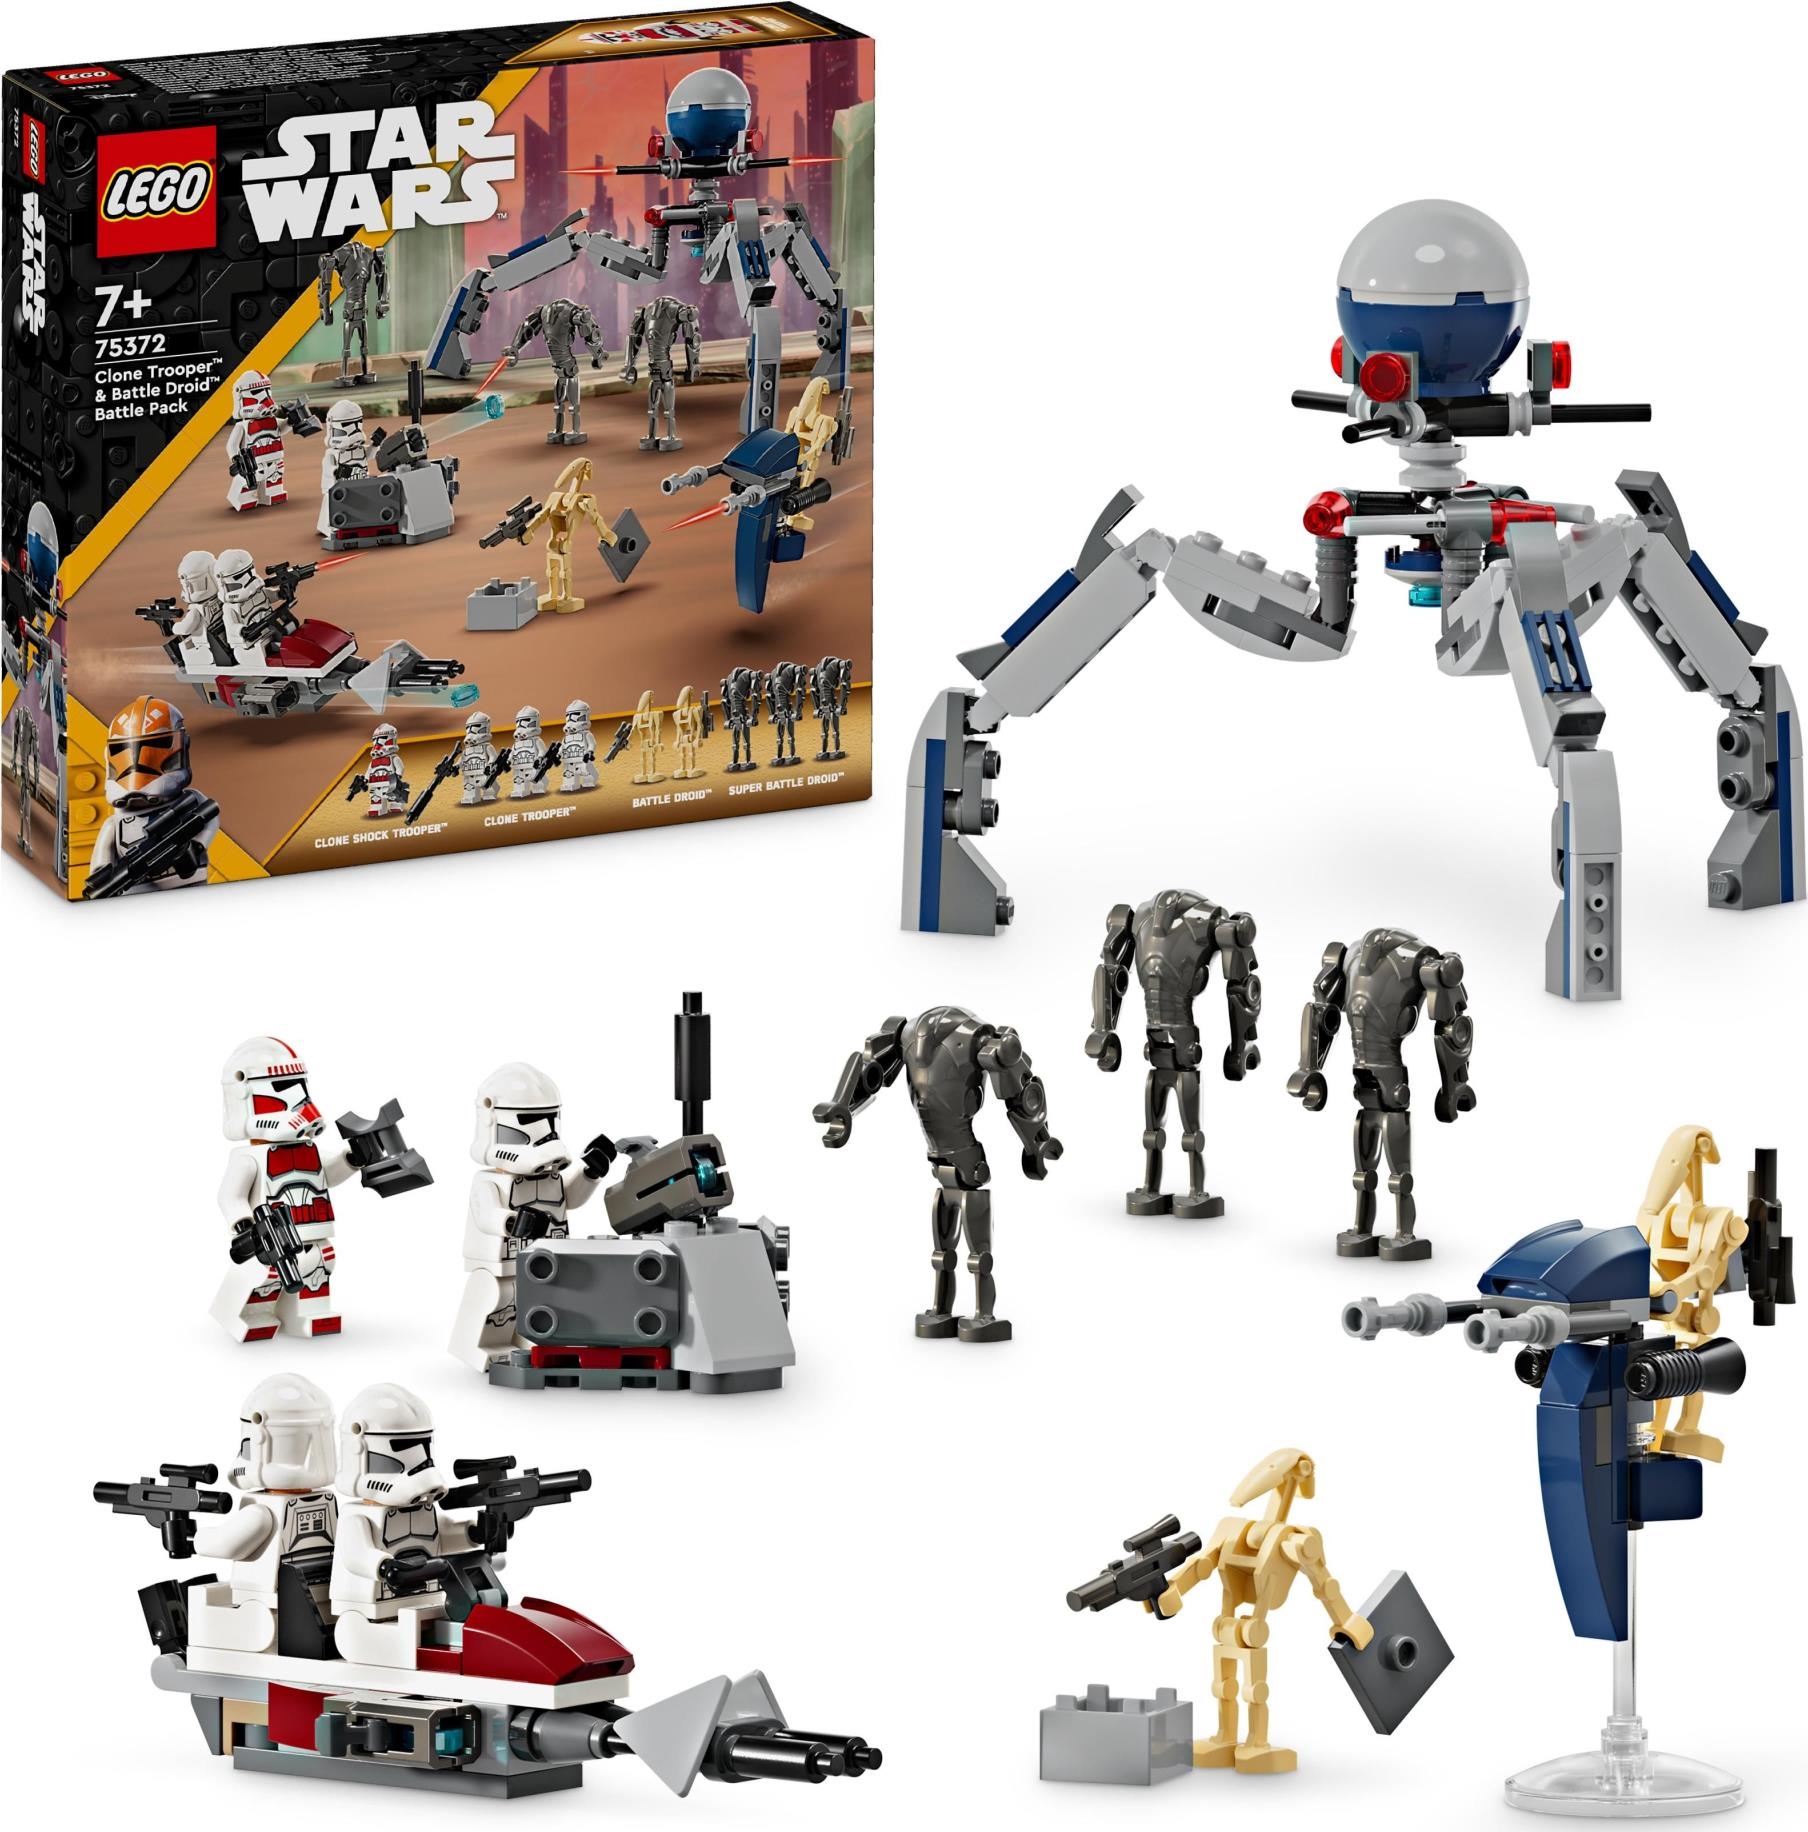 Star Wars: Lego 75372 - Battle Pack Clone Trooper E Battle Droid